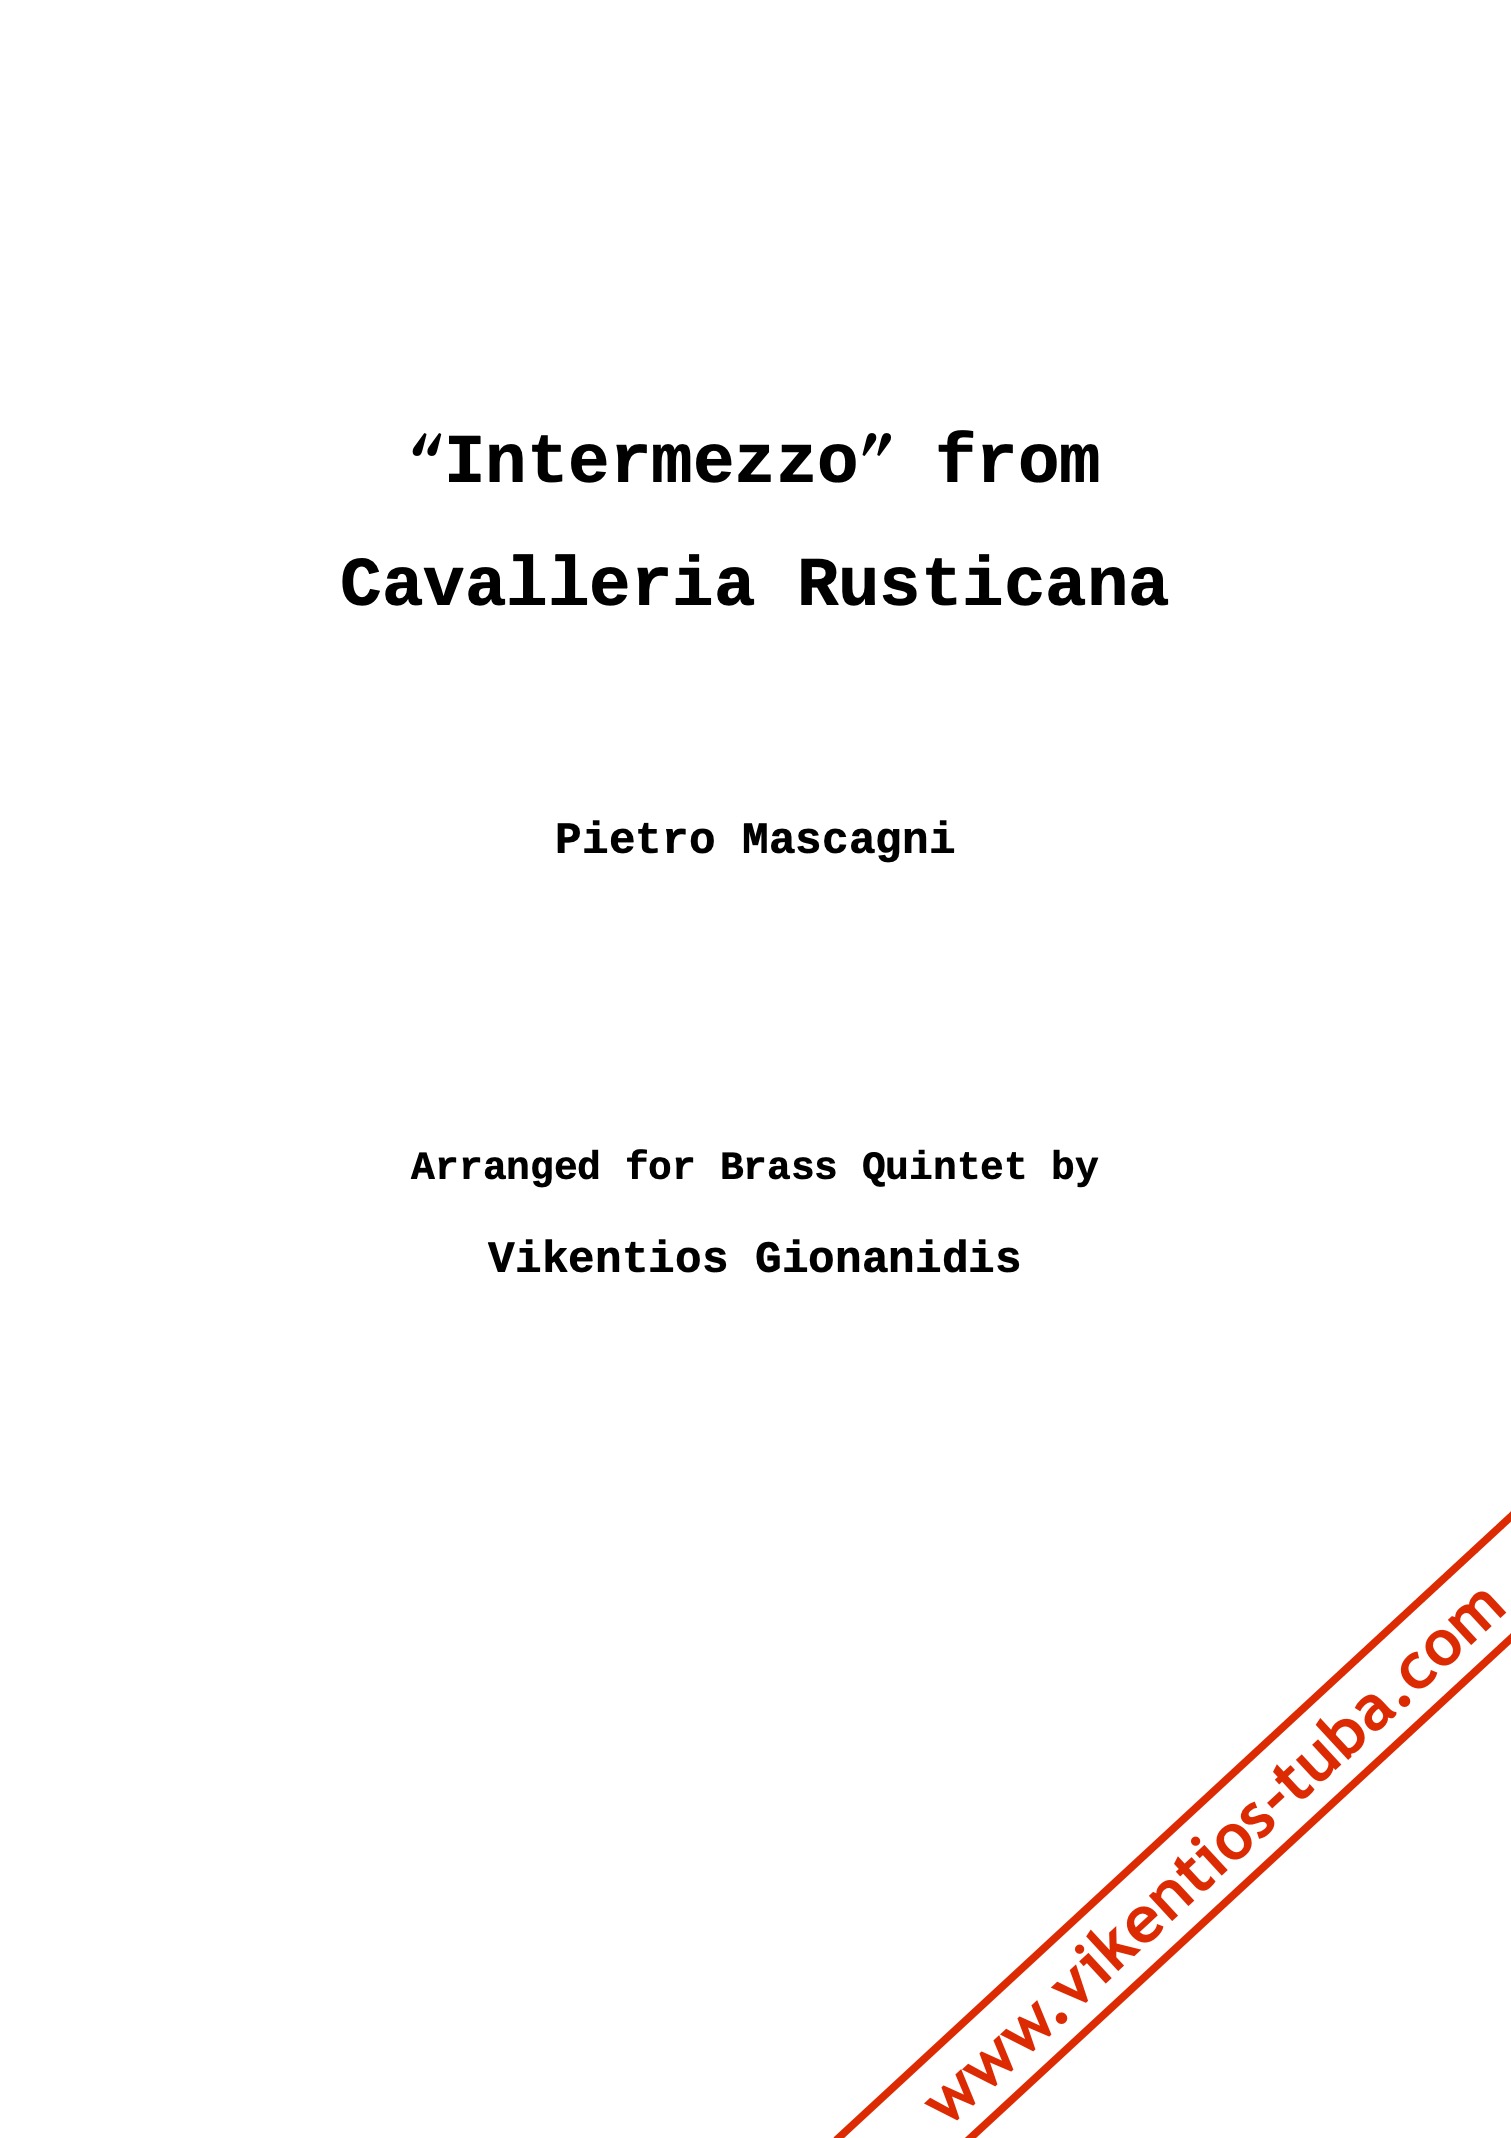 Intermezzo from Cavalleria Rusticana - P.Mascagni - brass quintet ...